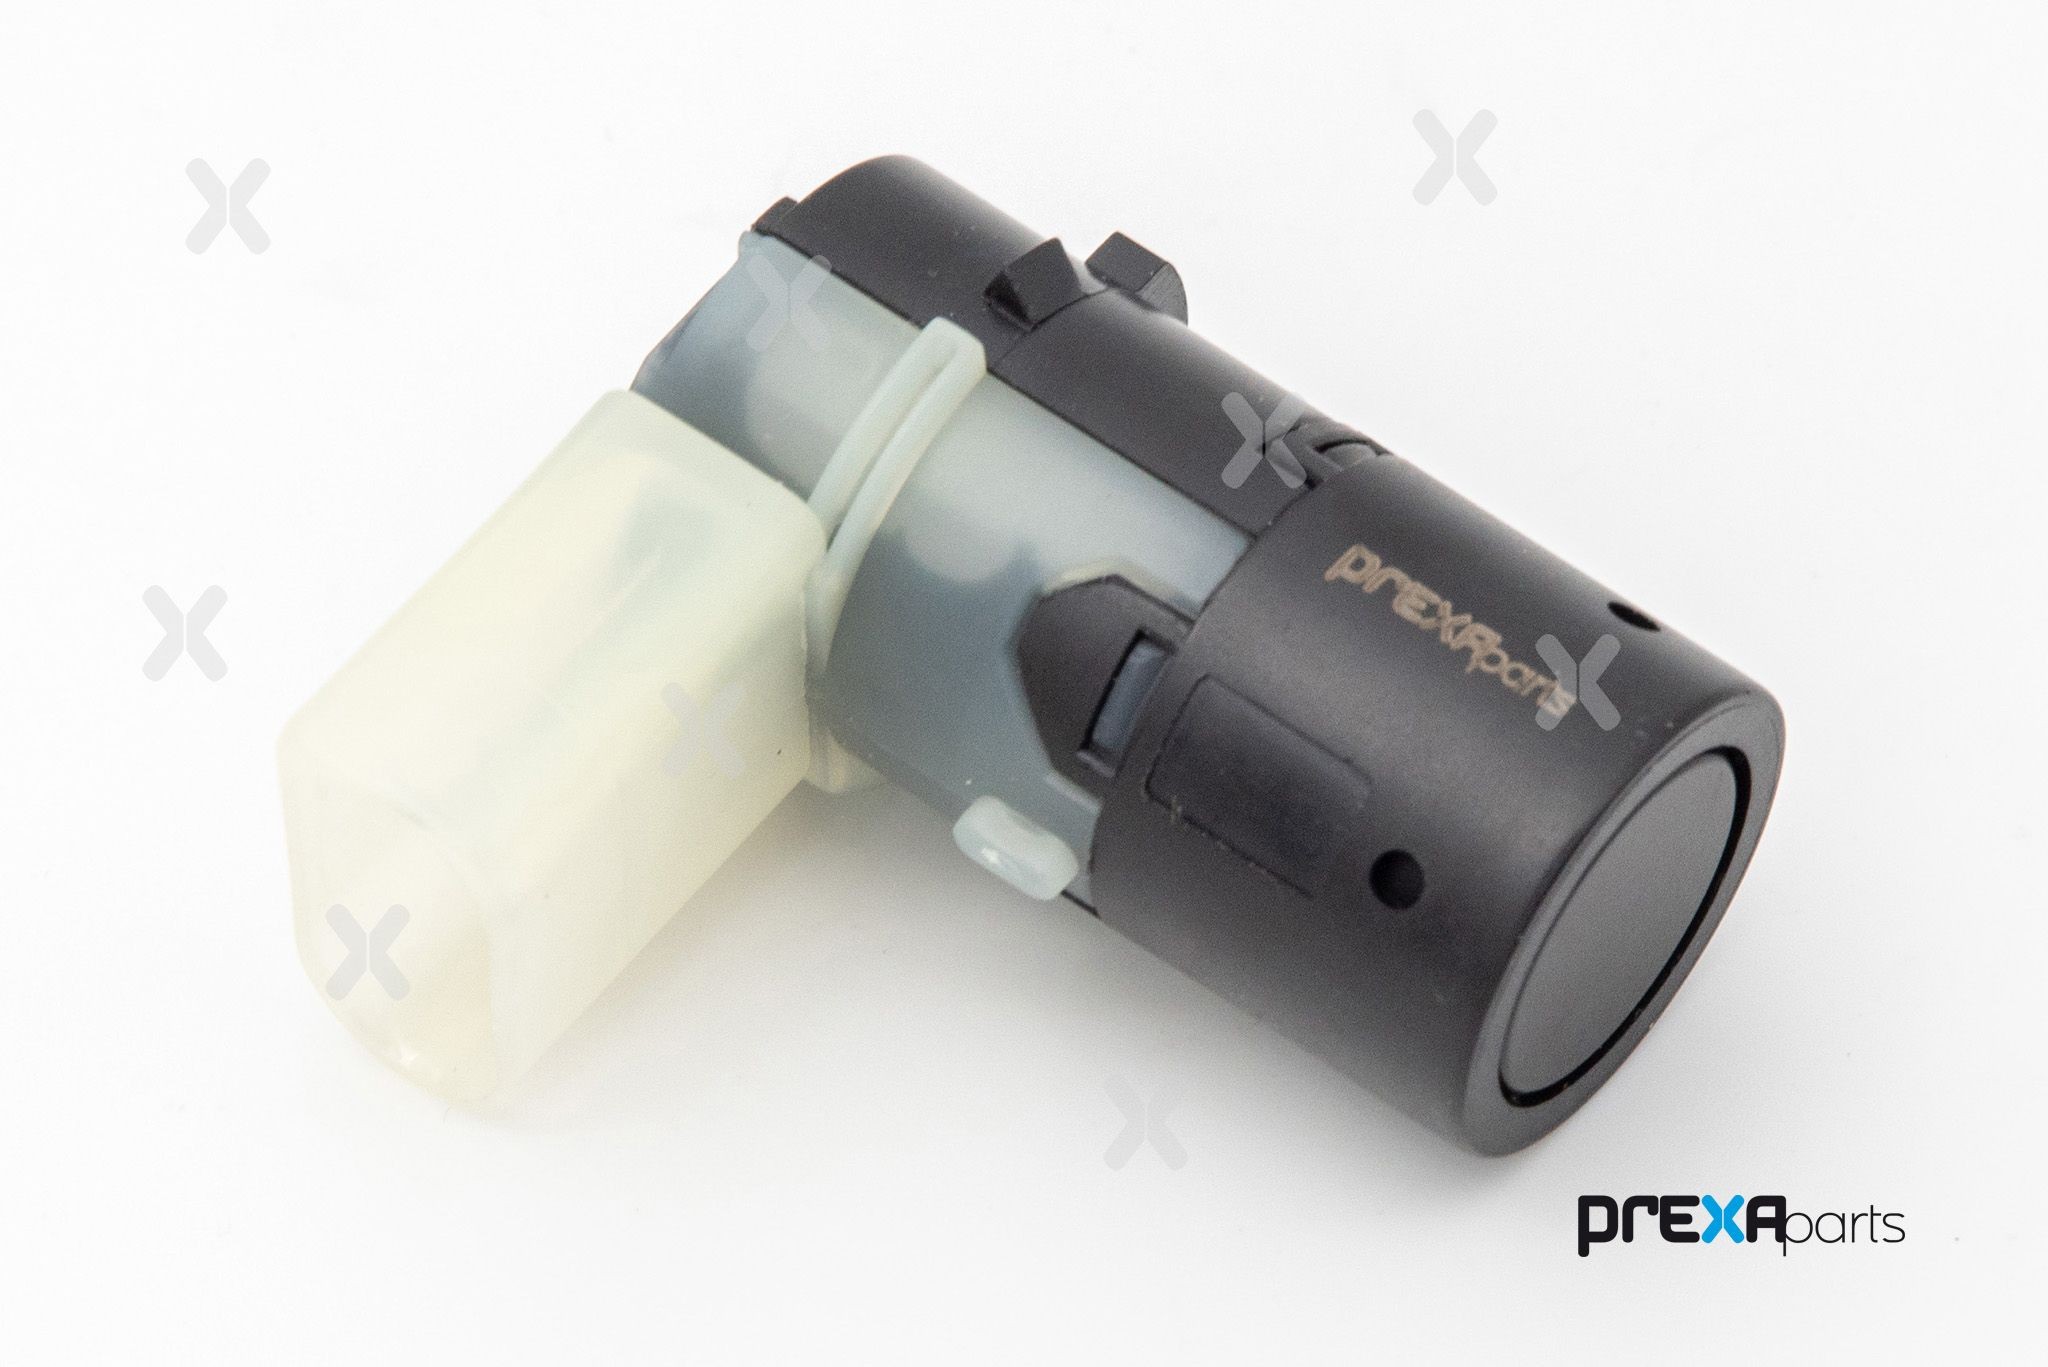 PREXAparts P103009 Parking sensor Ultrasonic Sensor